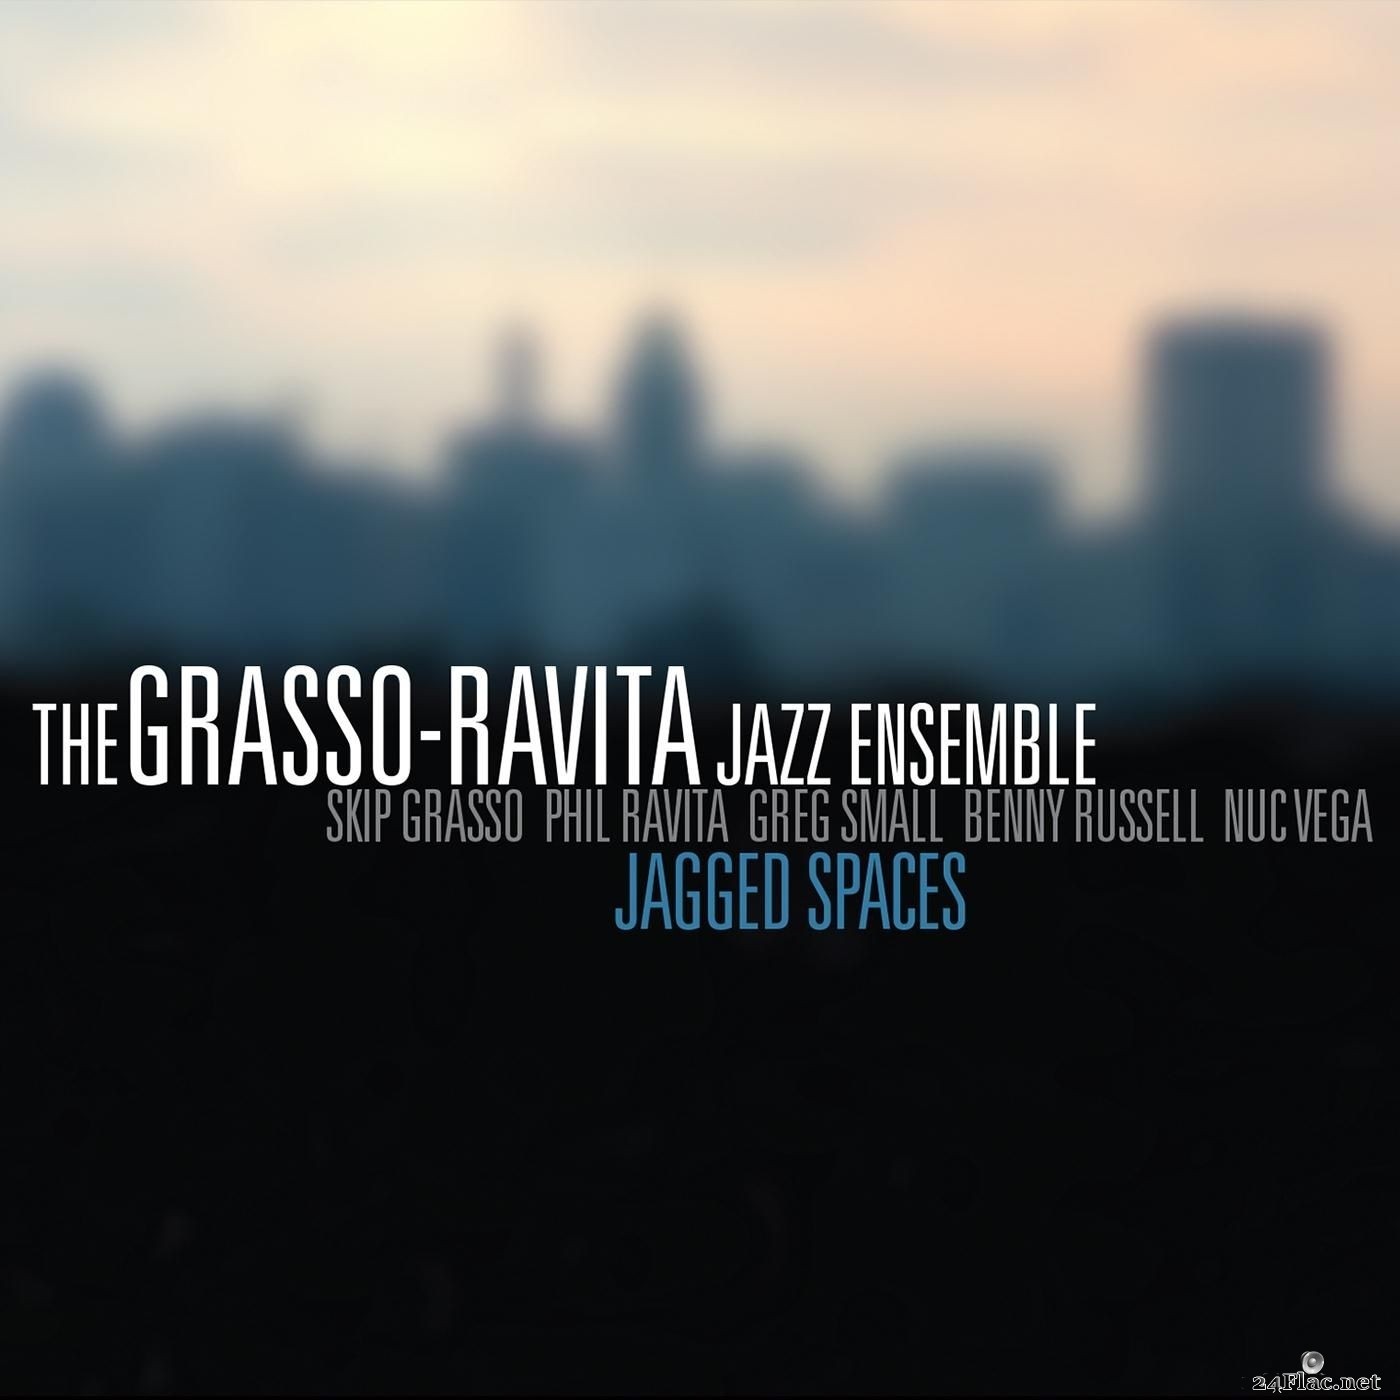 The Grasso-Ravita Jazz Ensemble - Jagged Spaces (2021) FLAC